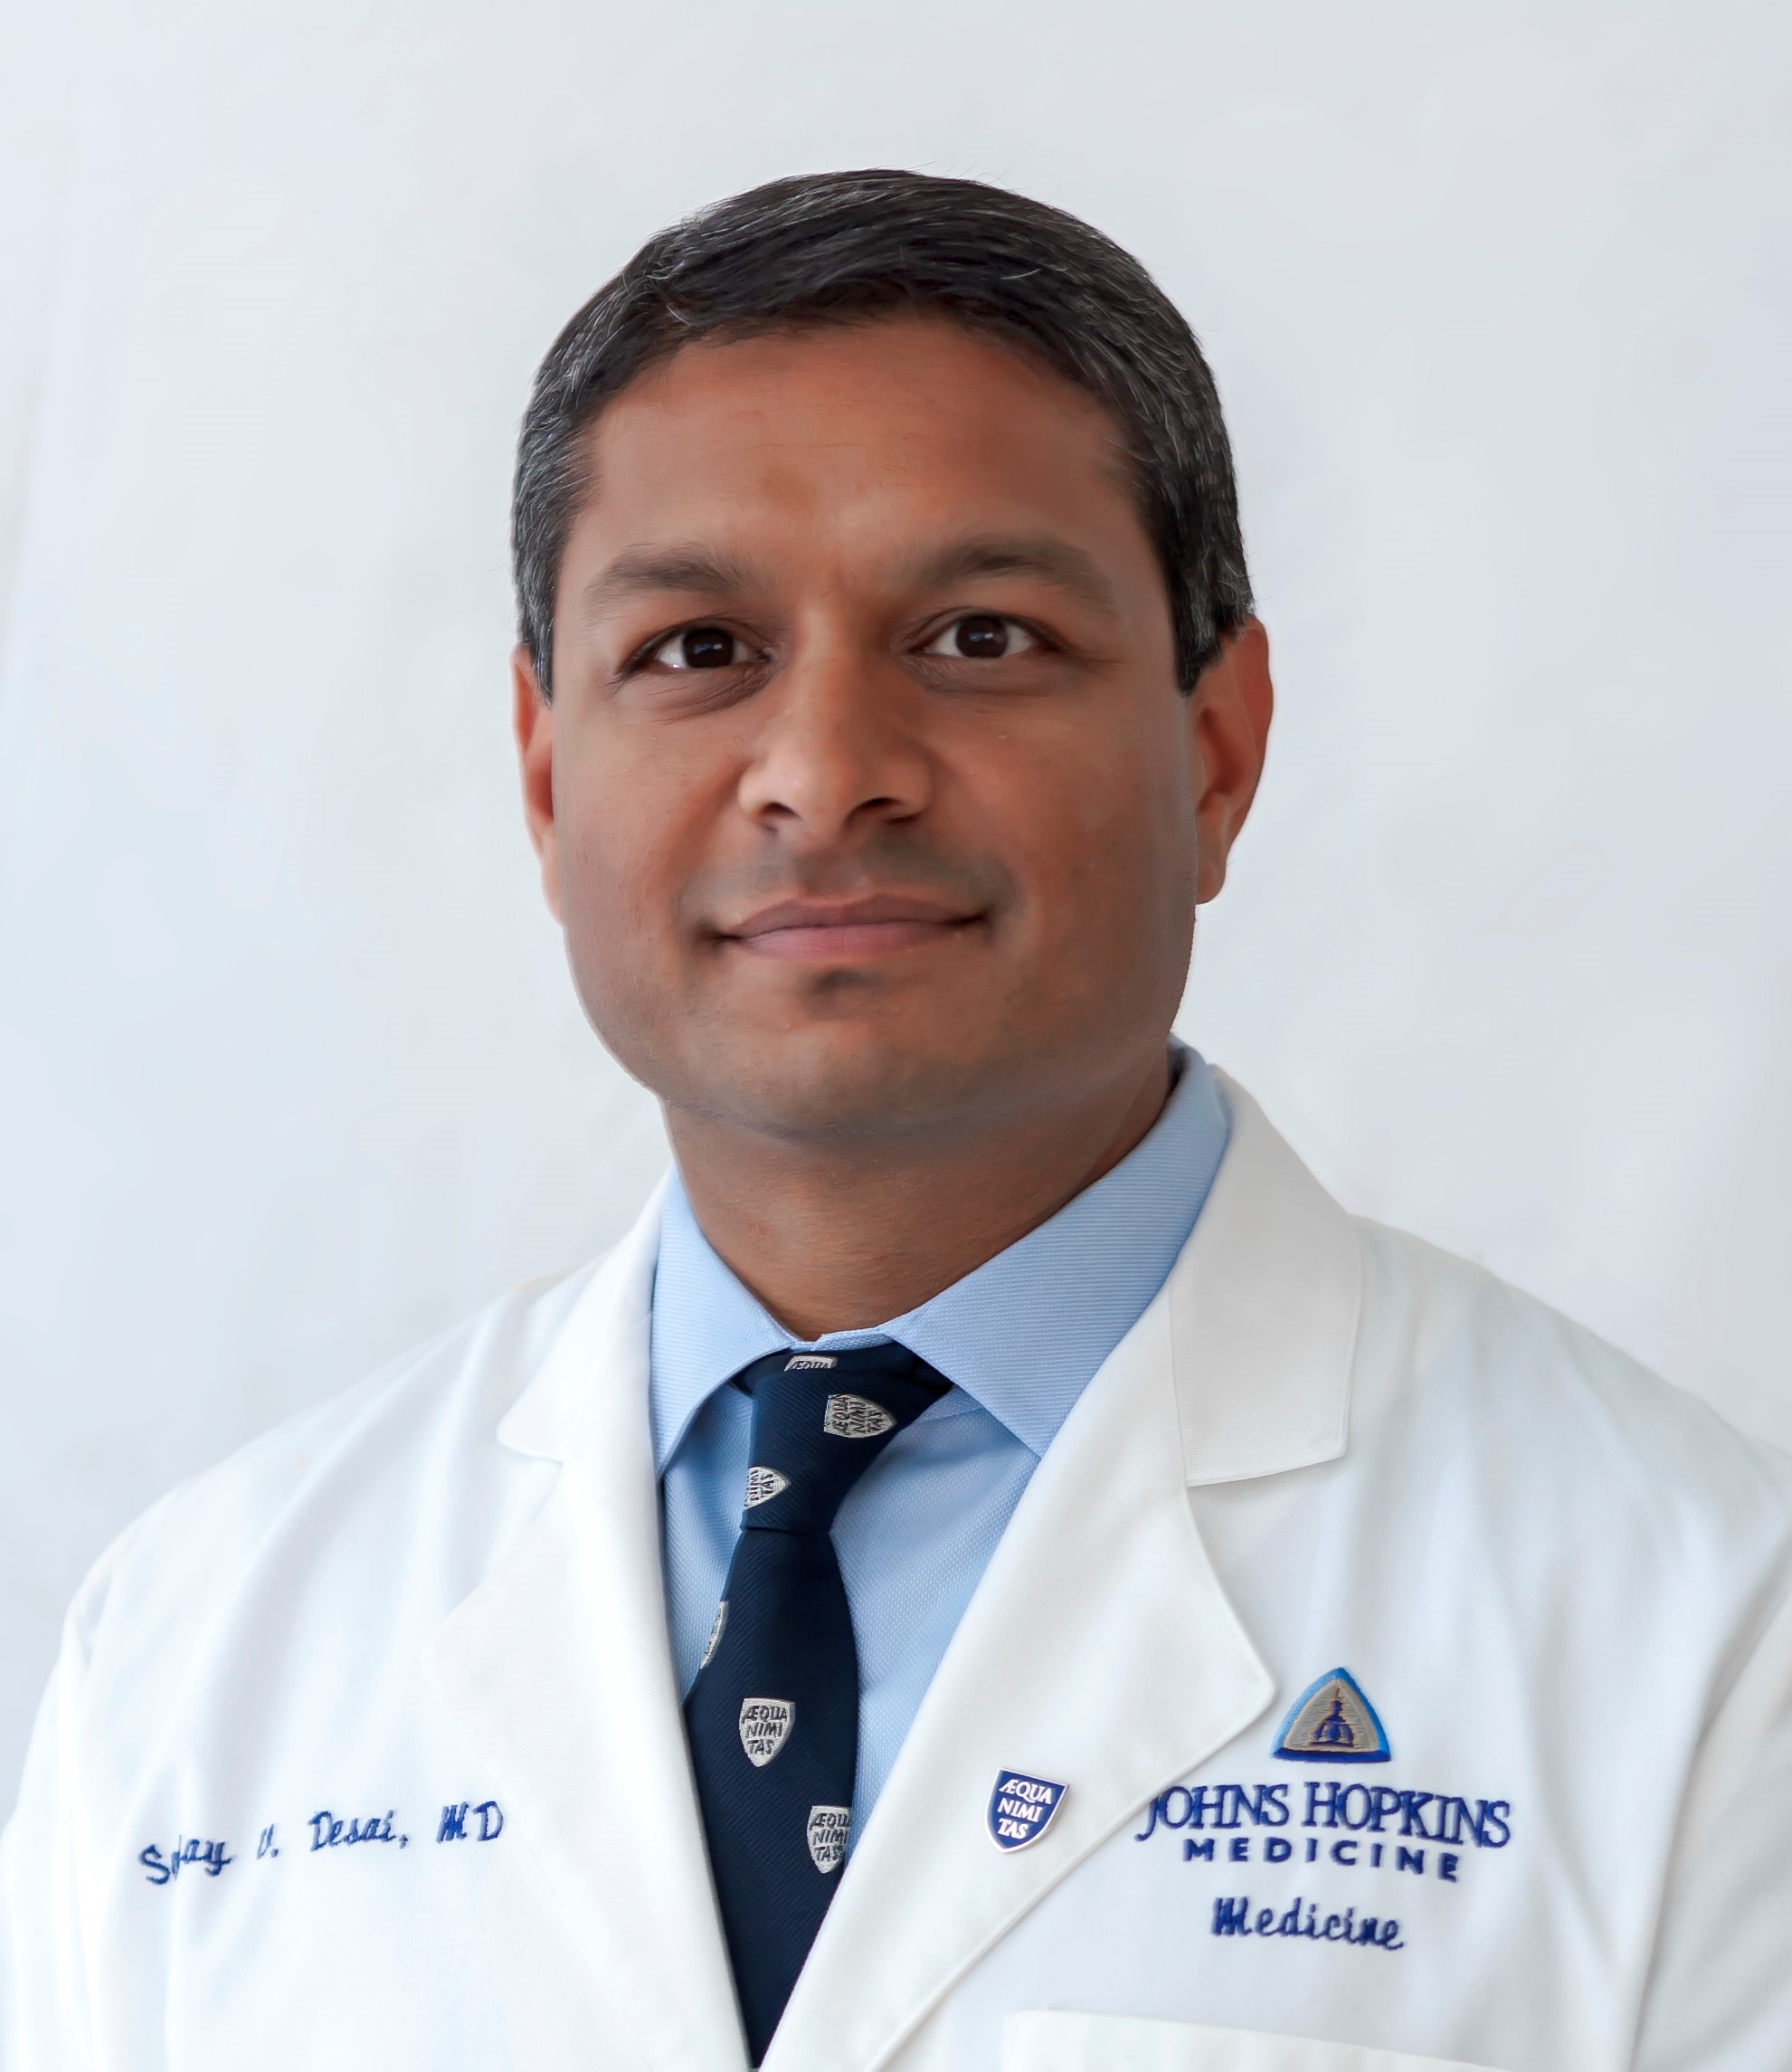 Sanjay Desai, M.D., Director Osler Medical Residency Program